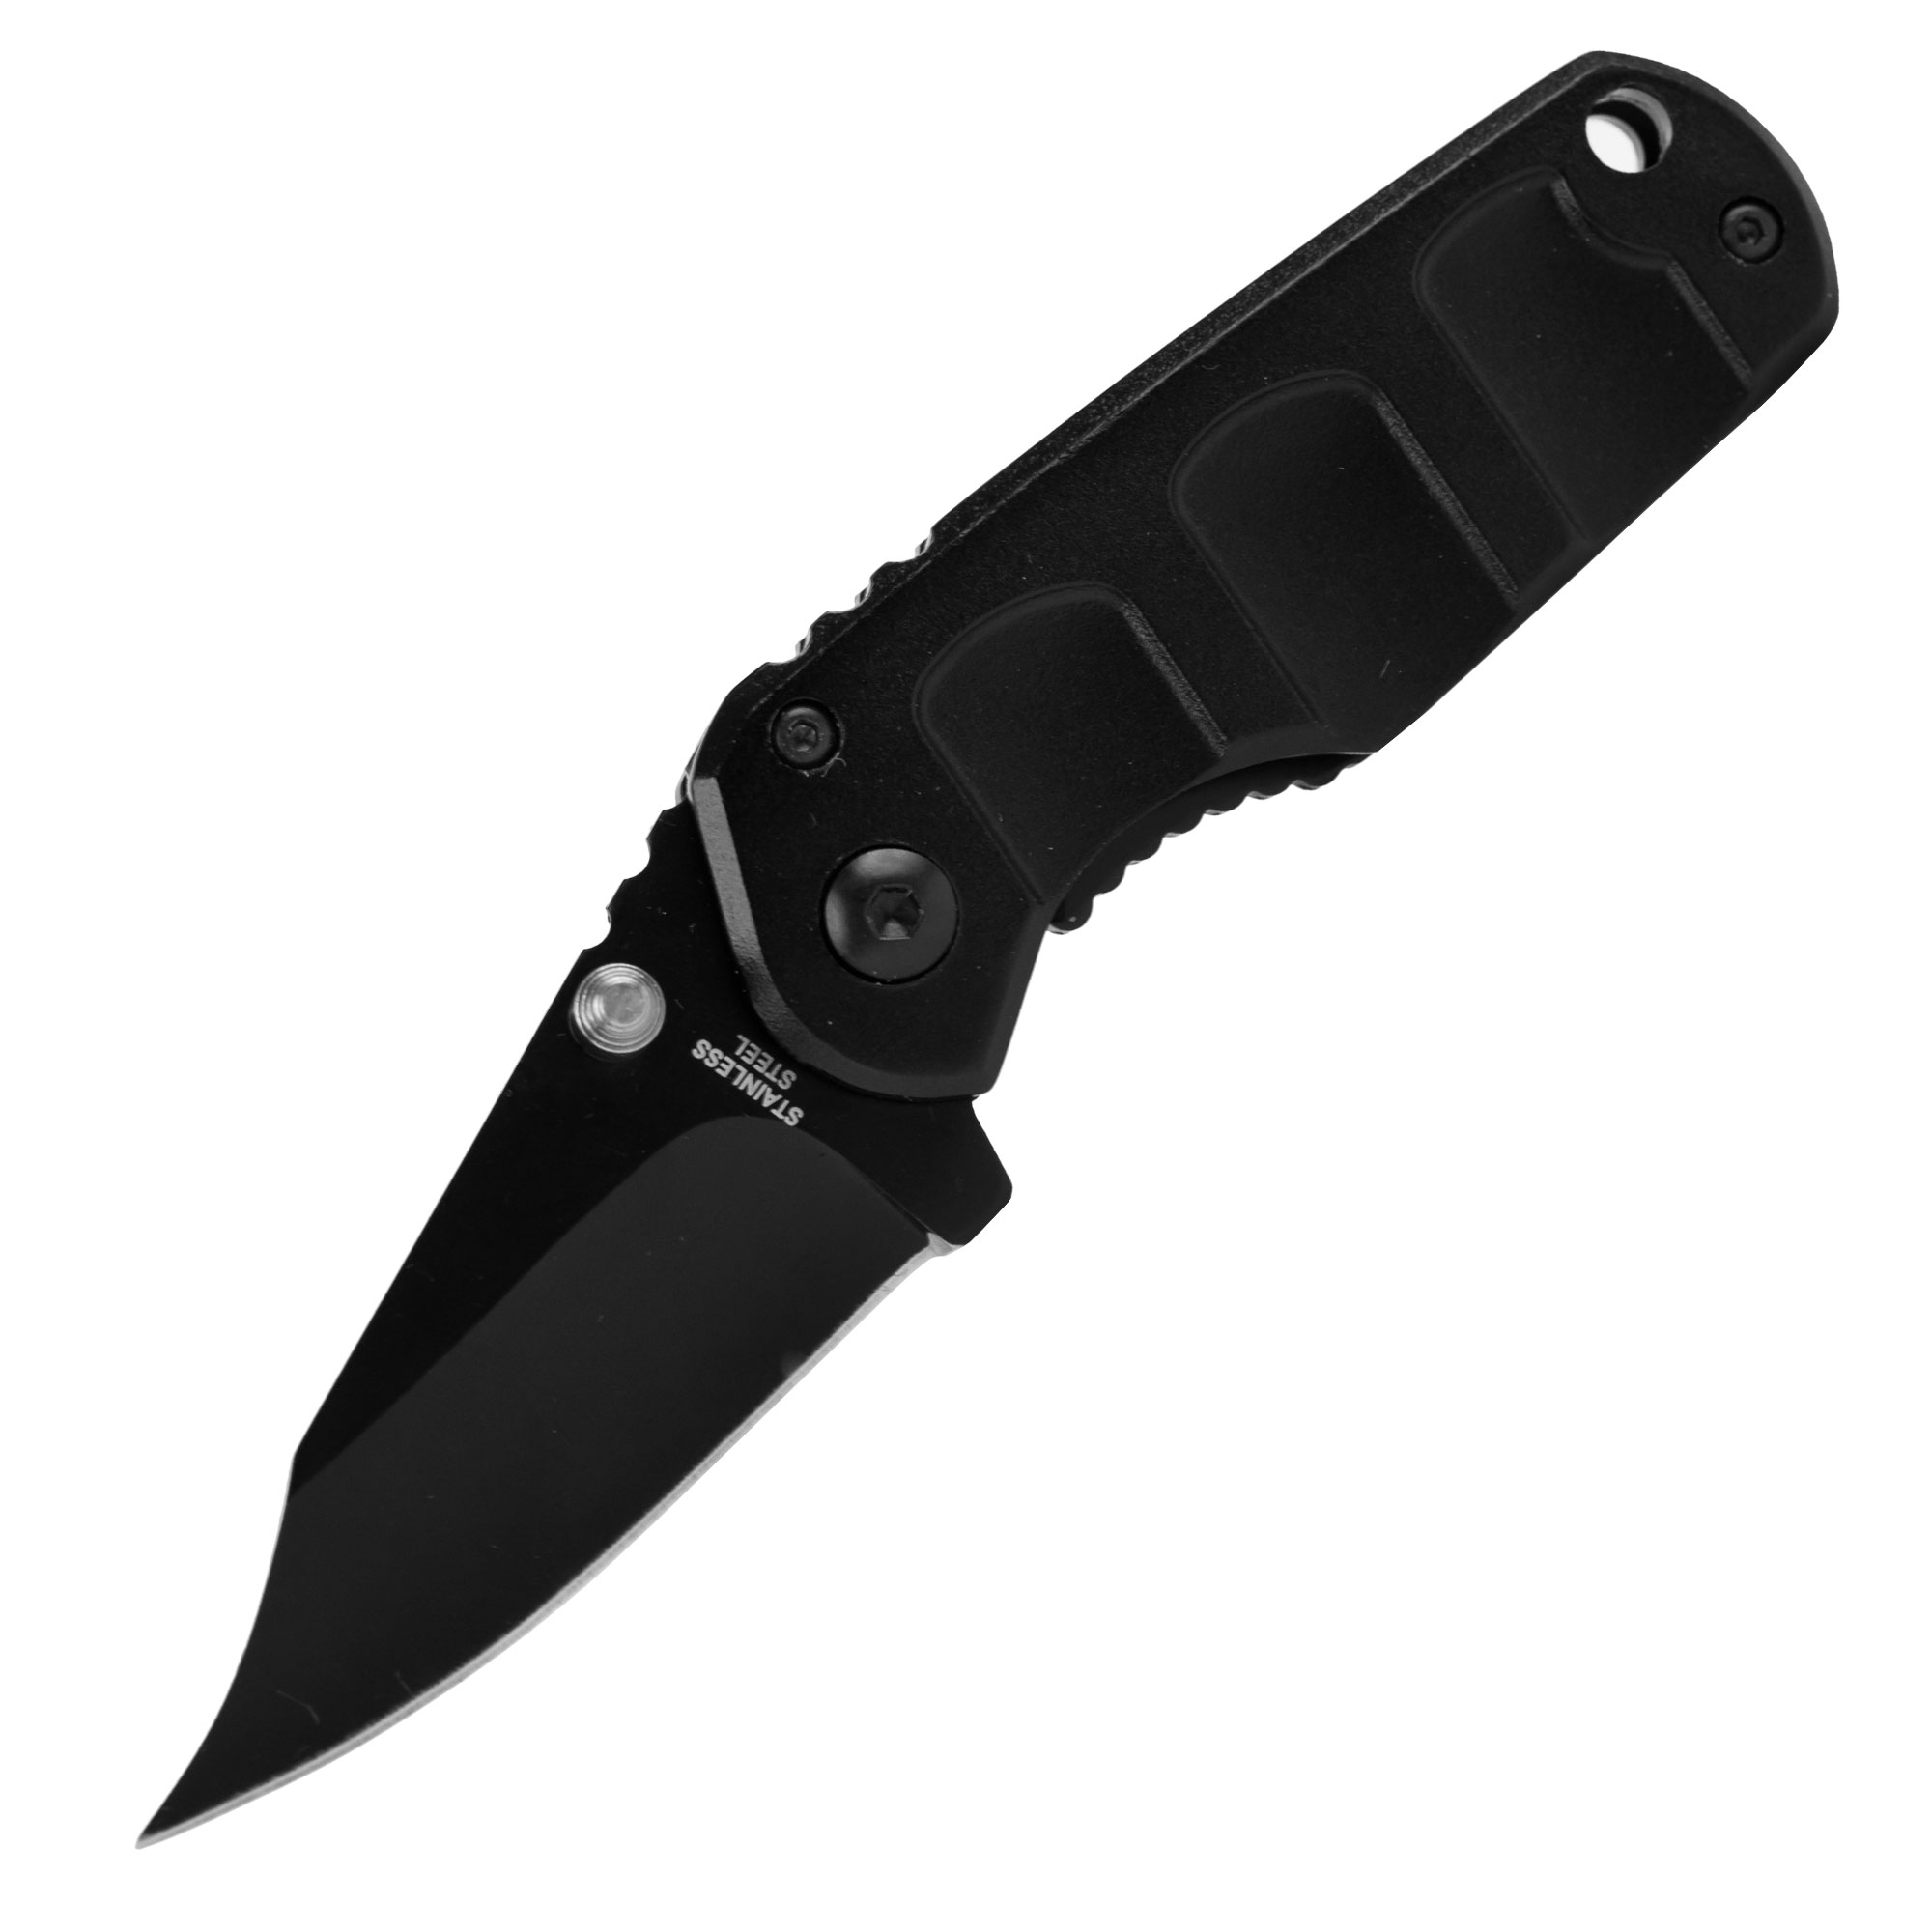 Whetstone Cutlery's Black Fob Folding Pocket Utility Knife